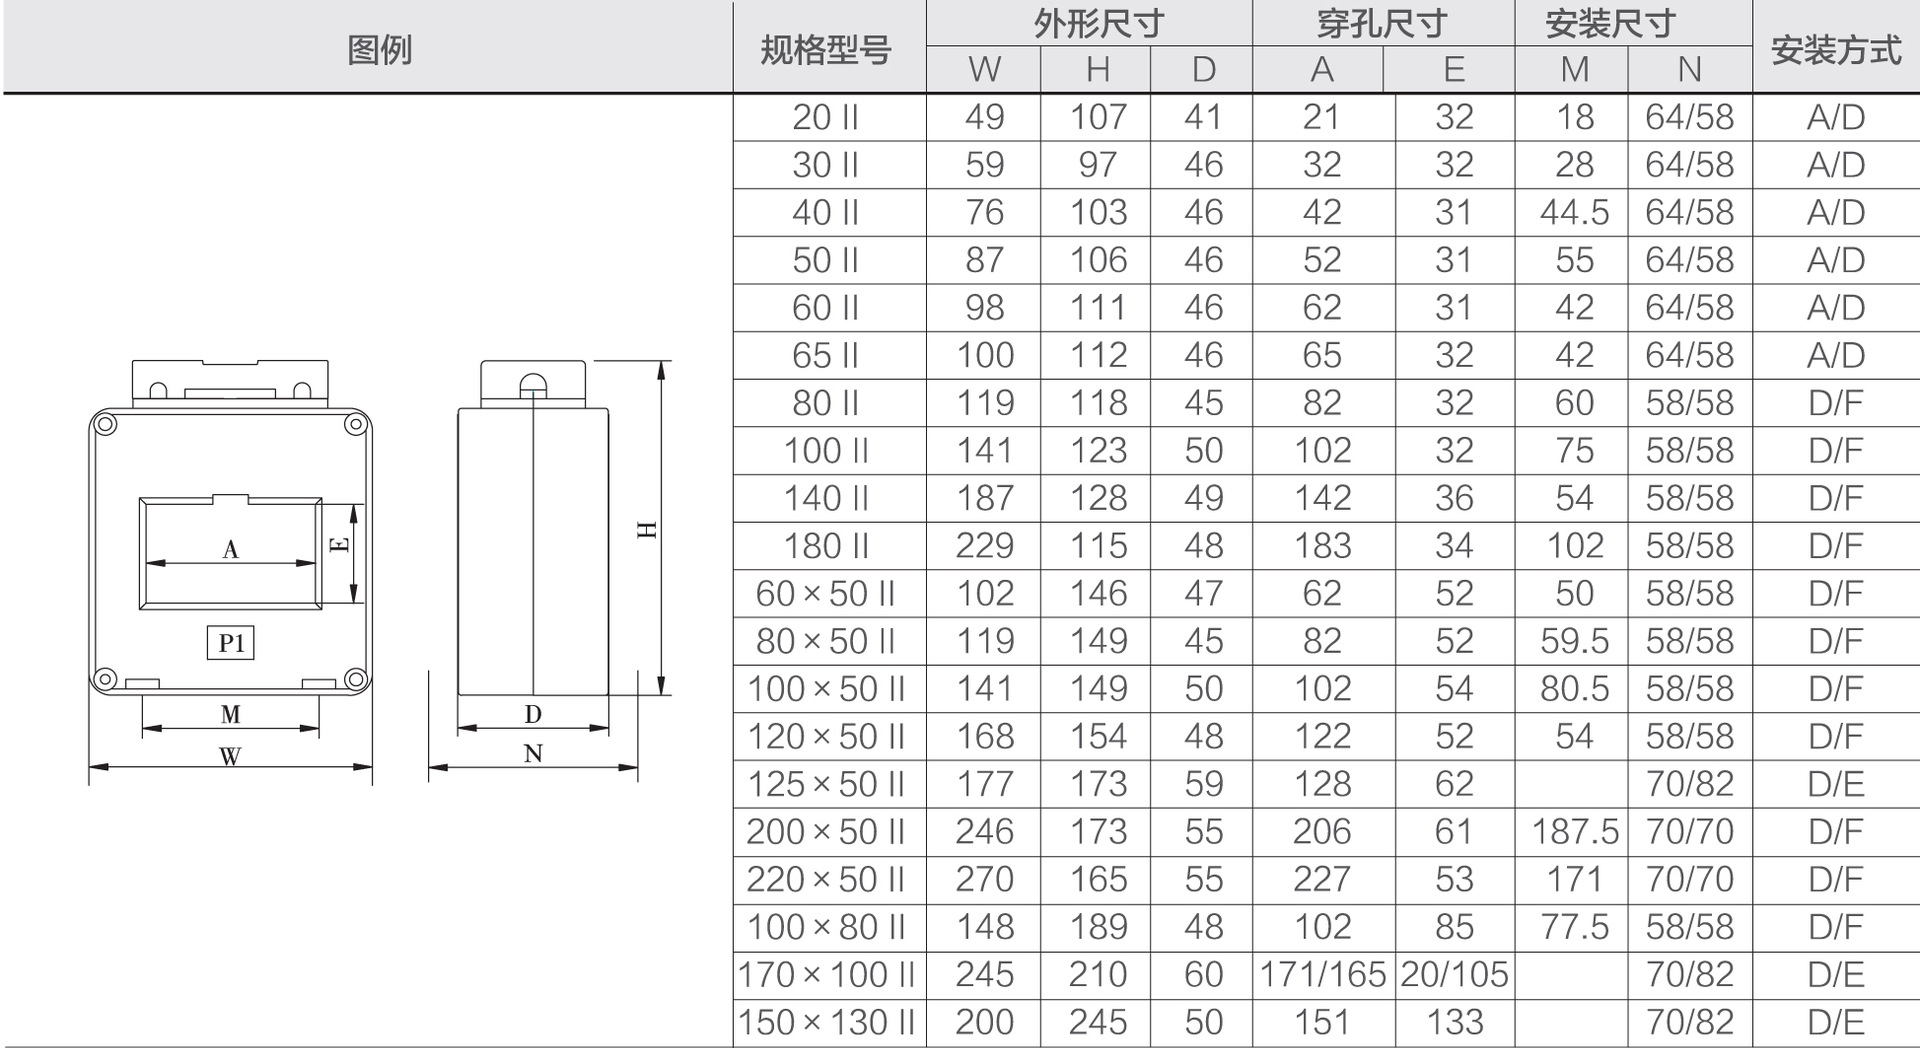 SHI-066-30I-I精度等级1级电流互感器江苏斯菲尔厂家直销 电流互感器,江苏斯菲尔厂家直销,SHI-066